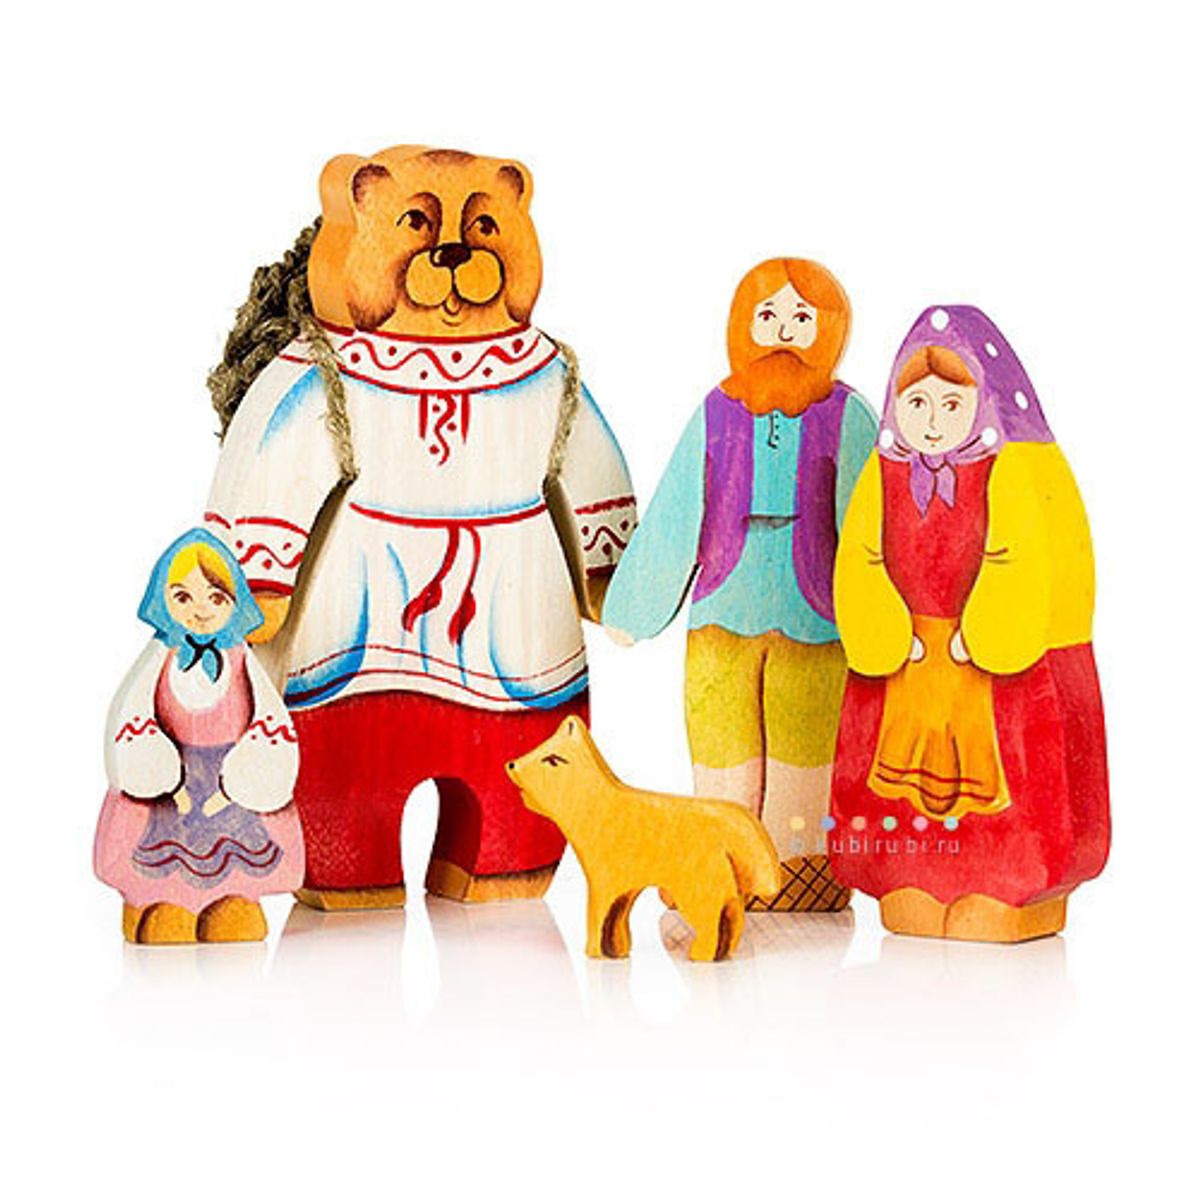 Маша и медведь поделка из пластилина Плей до. Masha and the bear Play doh ideas. �Видео для детей